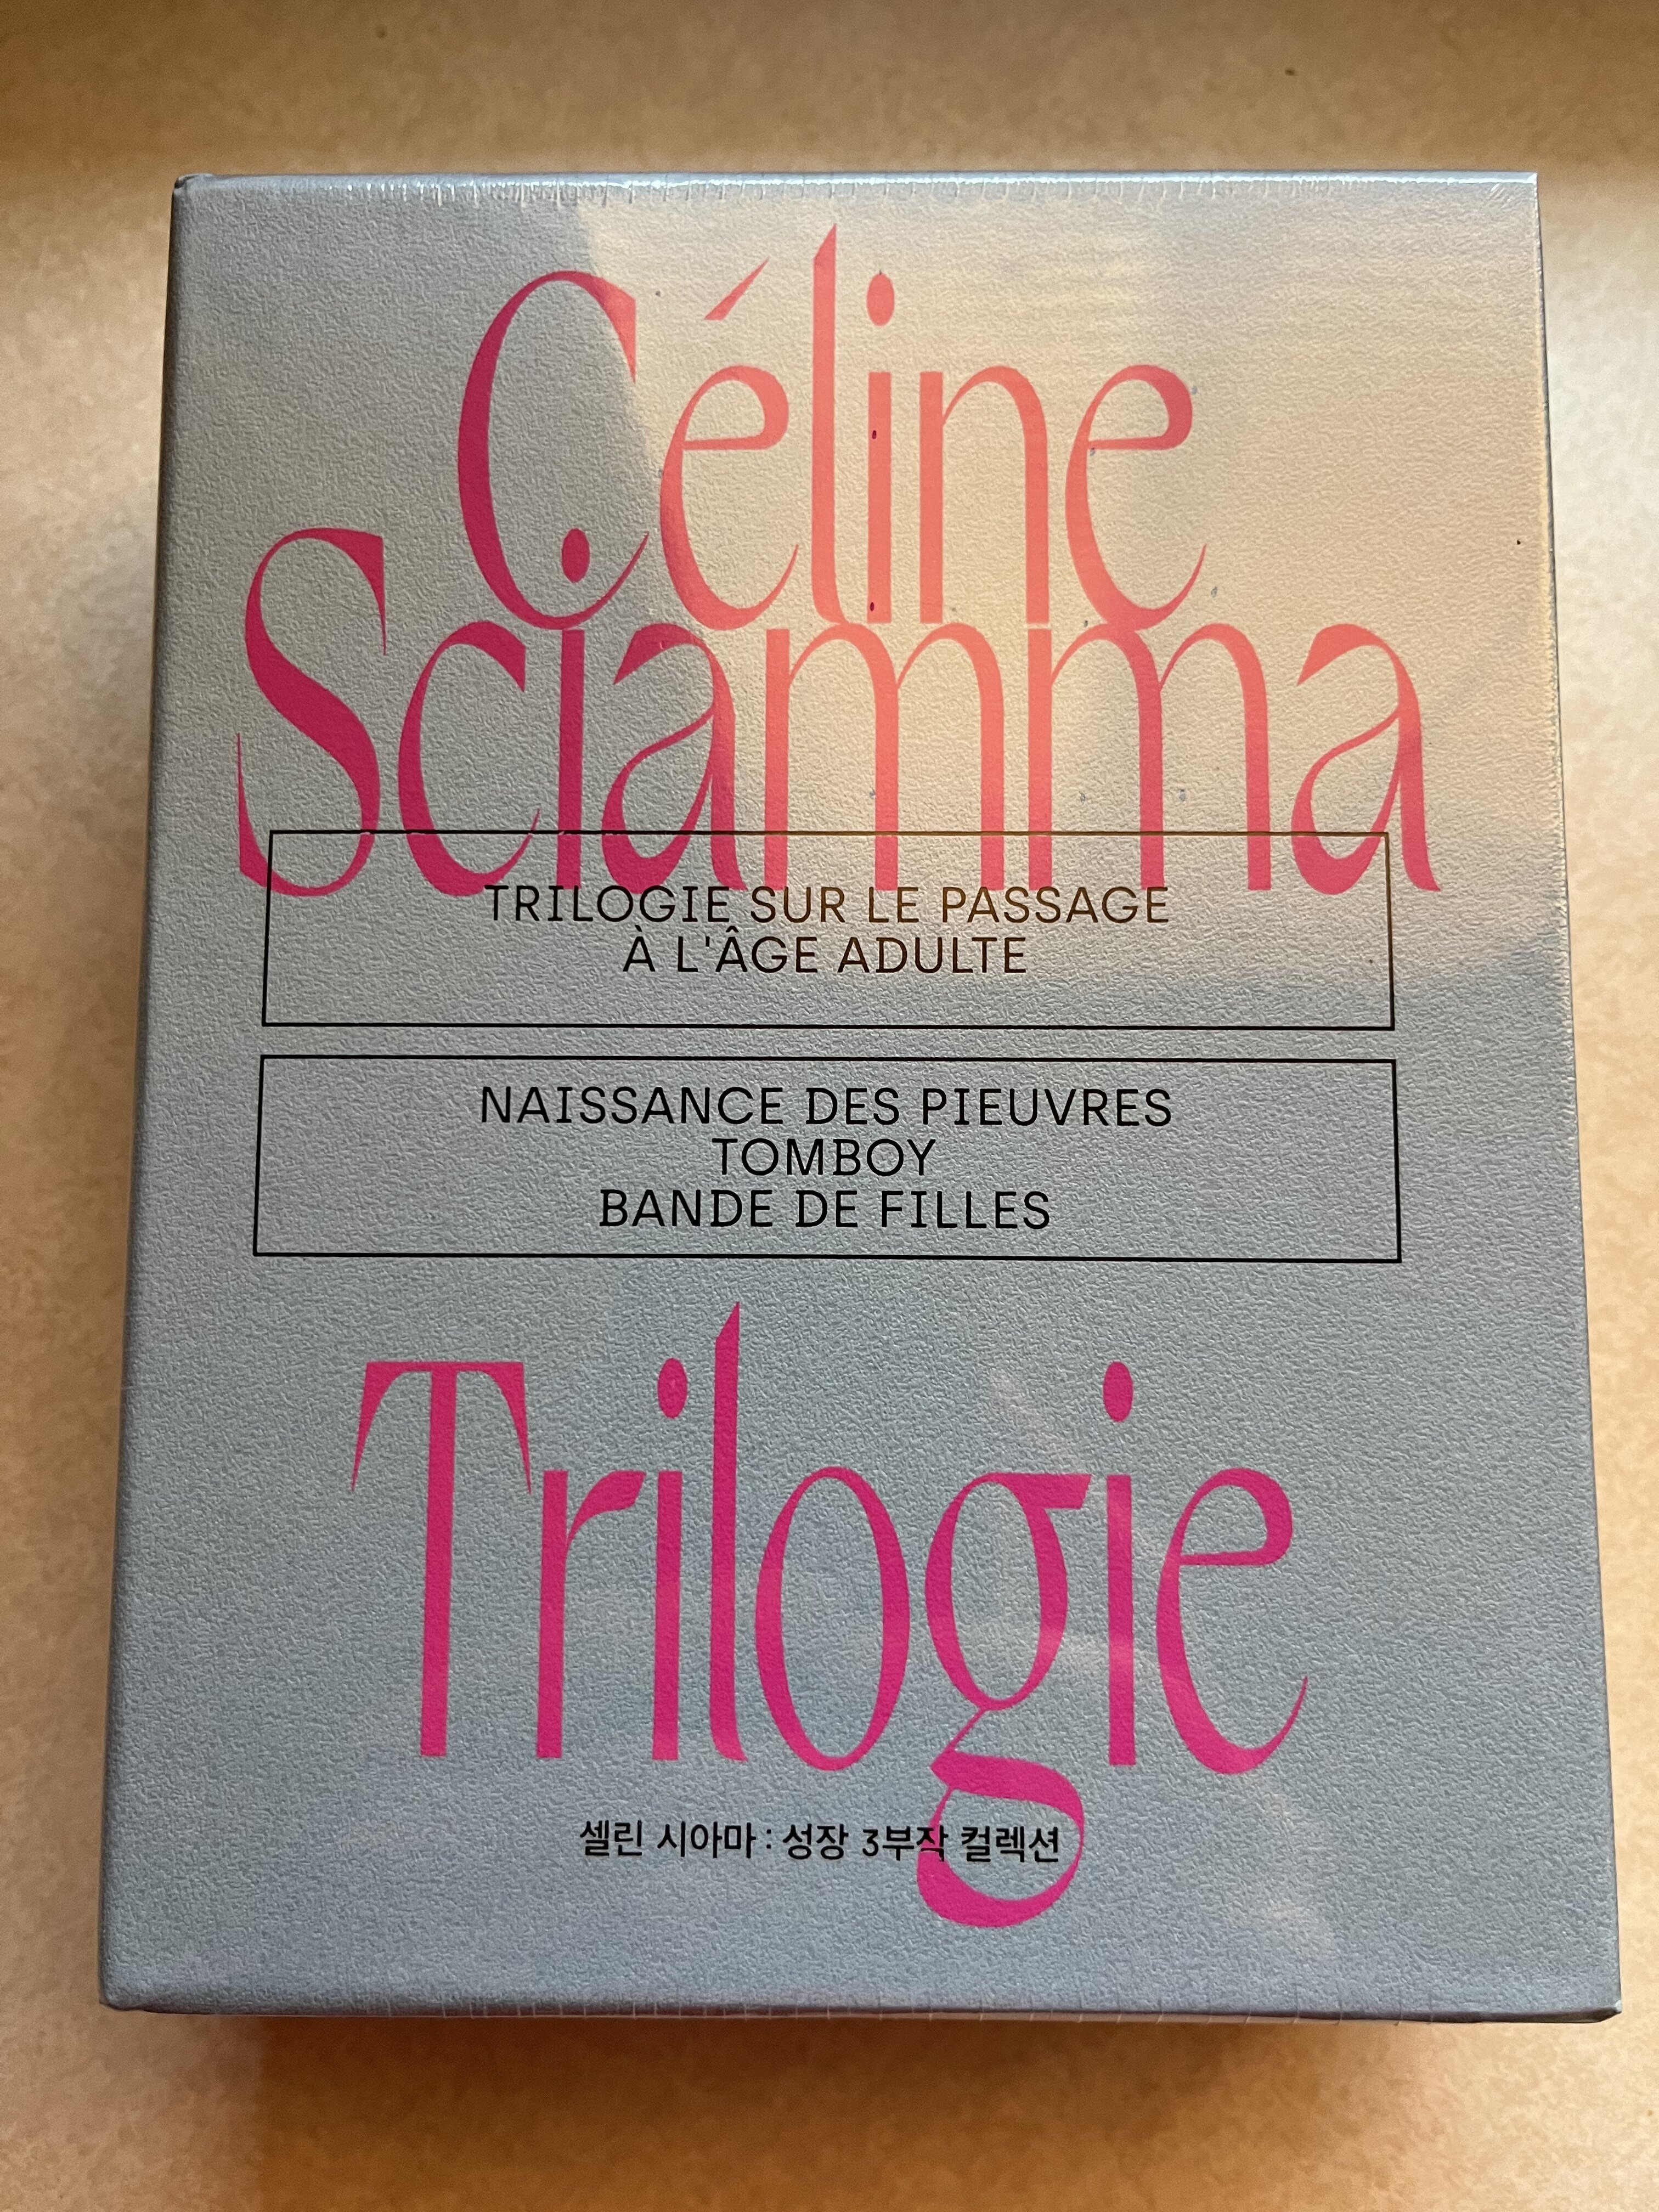 Céline Sciamma Coming-Of-Age Trilogy 1.JPG